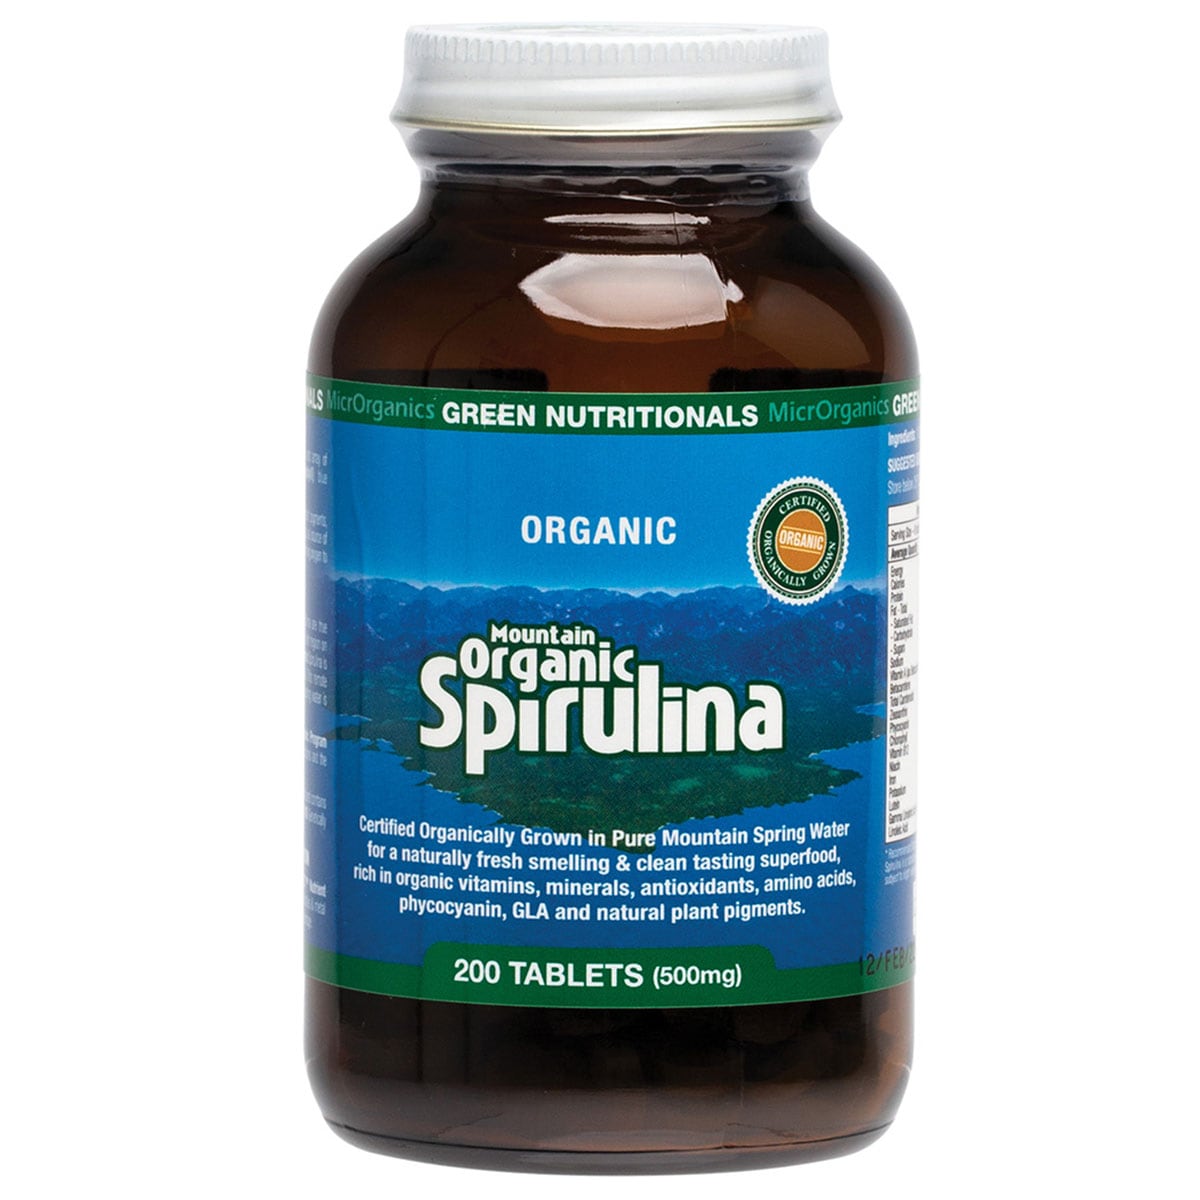 Green Nutritionals Mountain Organic Spirulina 200 Tablets